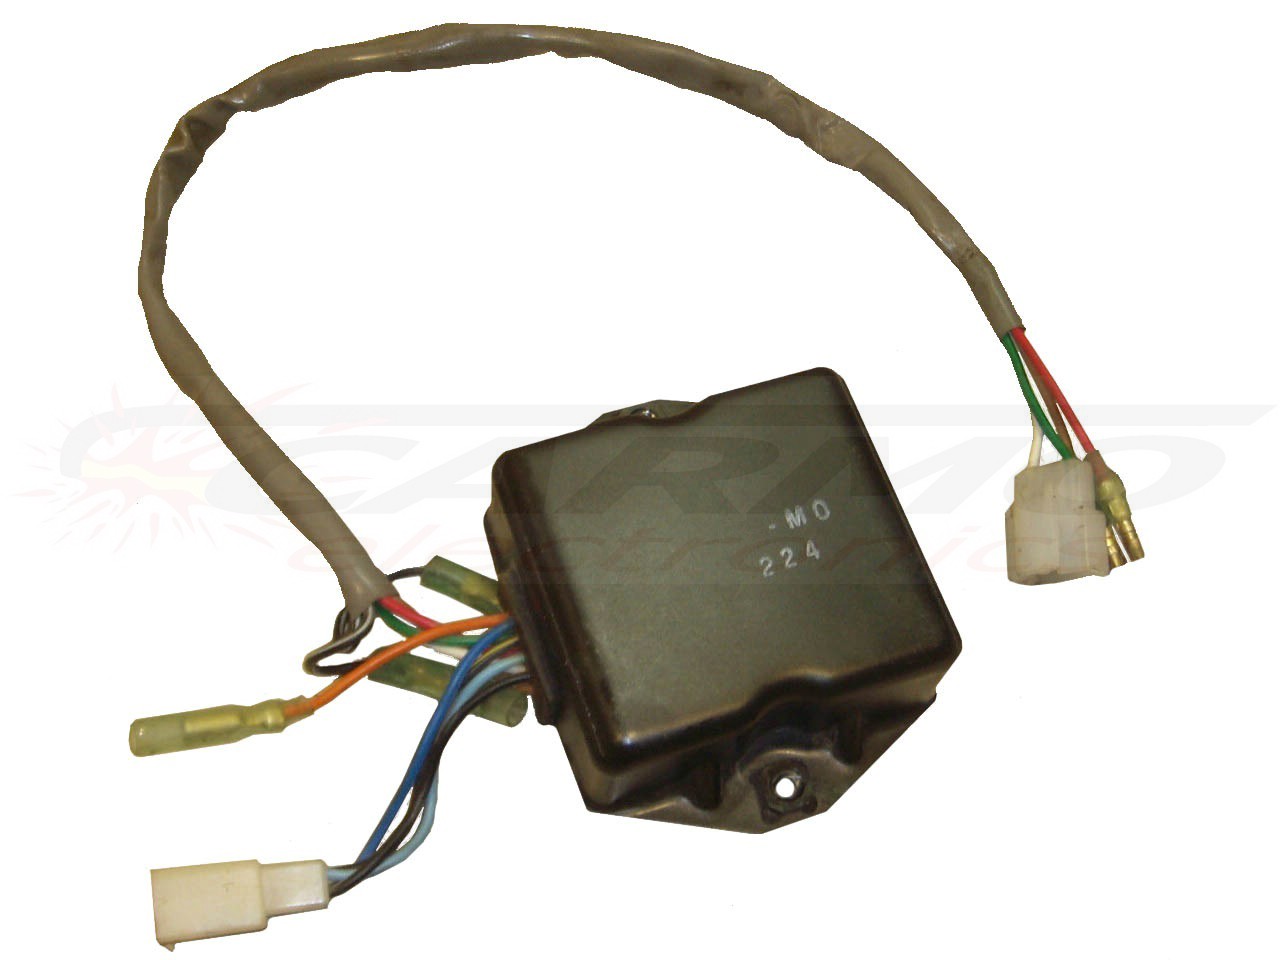 AG200 CDI dispositif de commande boîte noire (12V-MO, 12V-M0)